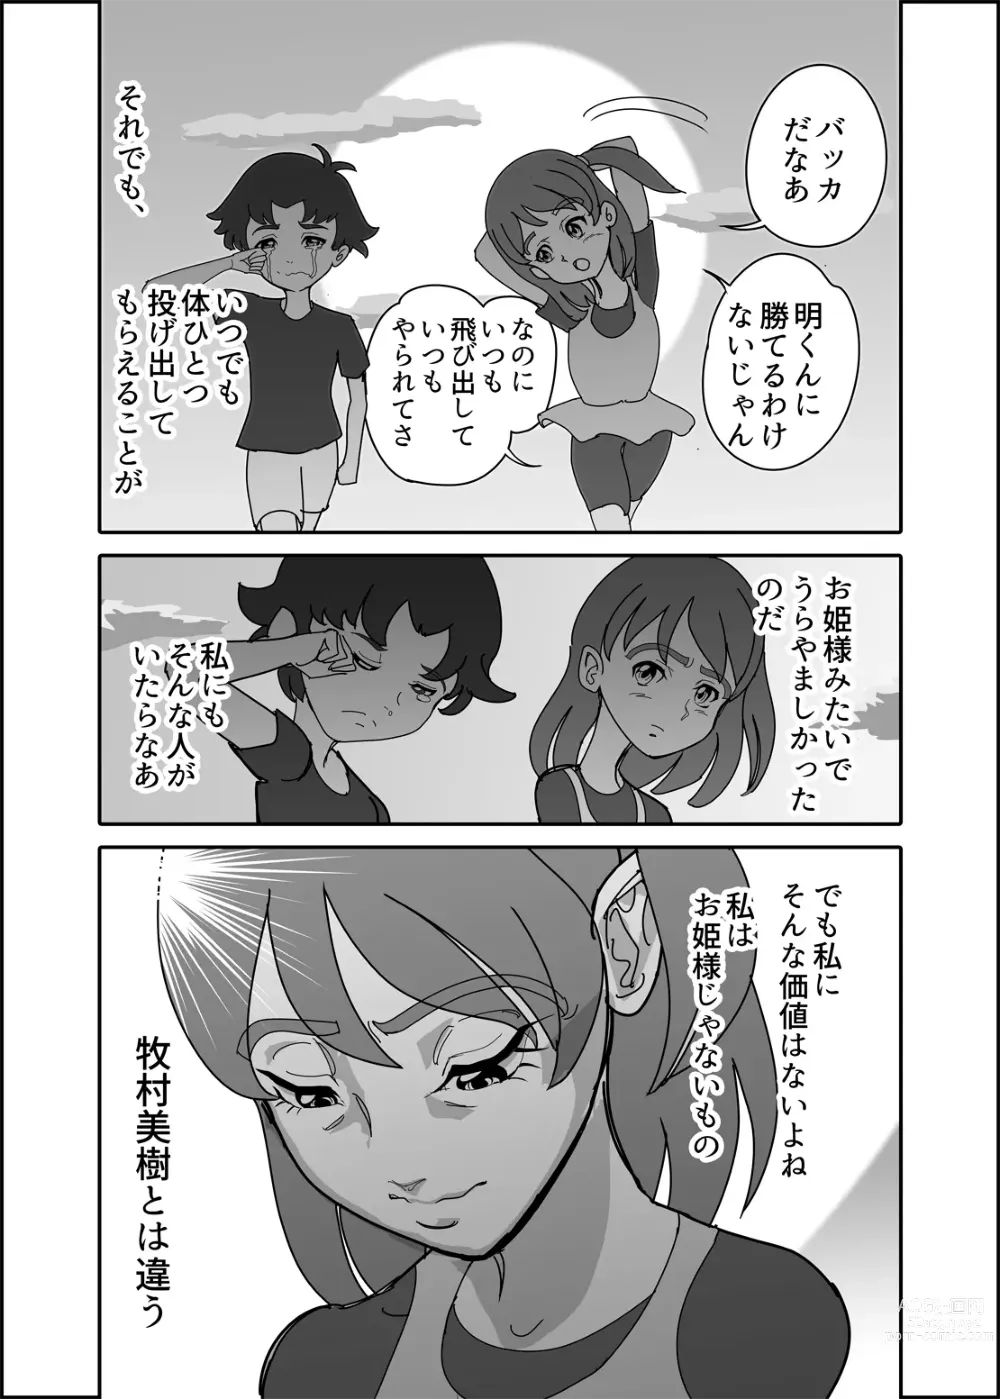 Page 3 of doujinshi Crybabys # 2 Miiko Matome